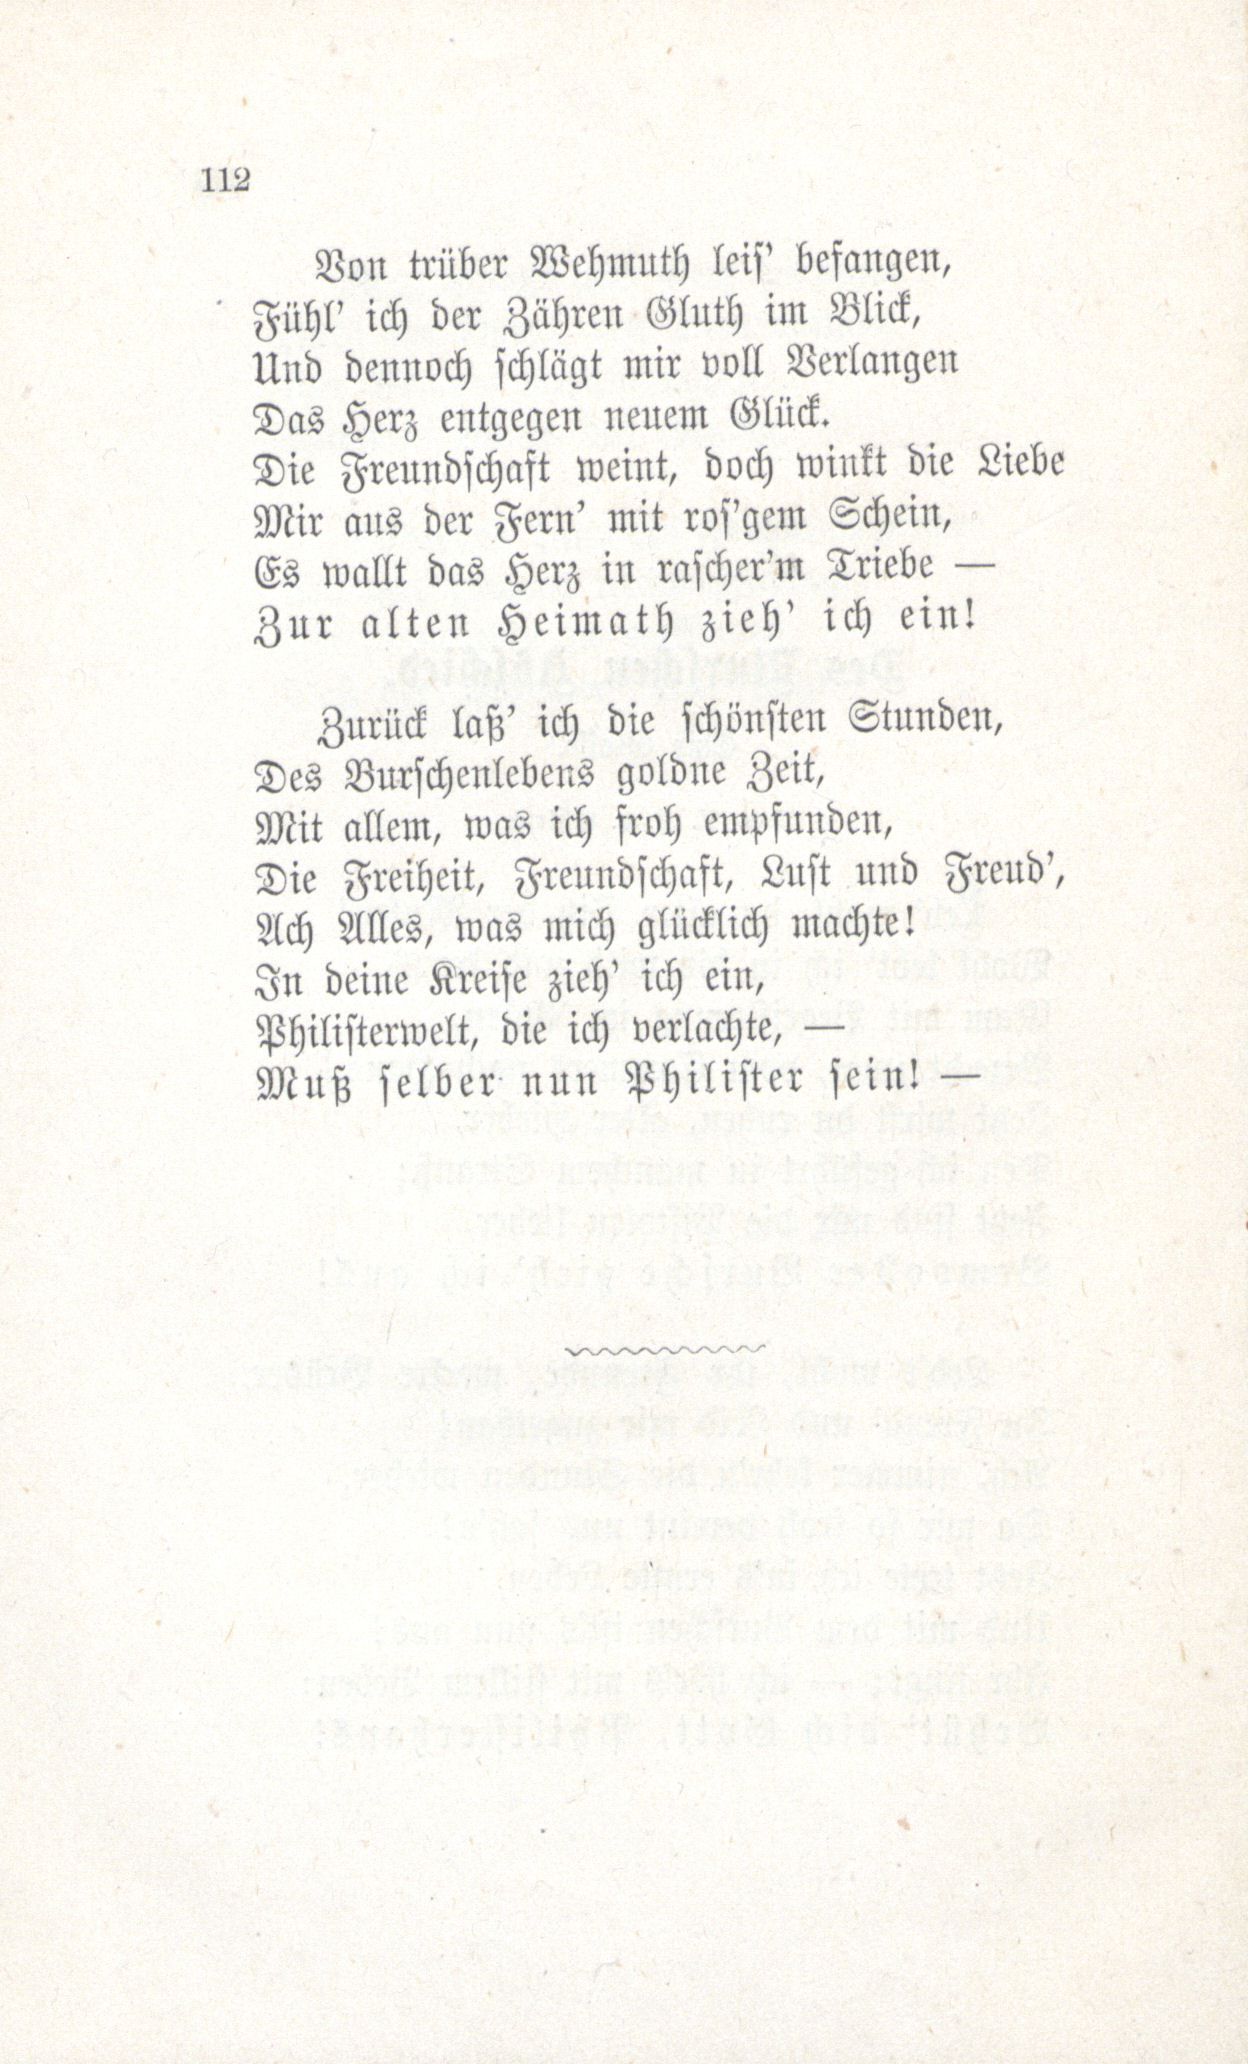 Erinnerung an die Fraternitas (1880) | 113. (112) Main body of text